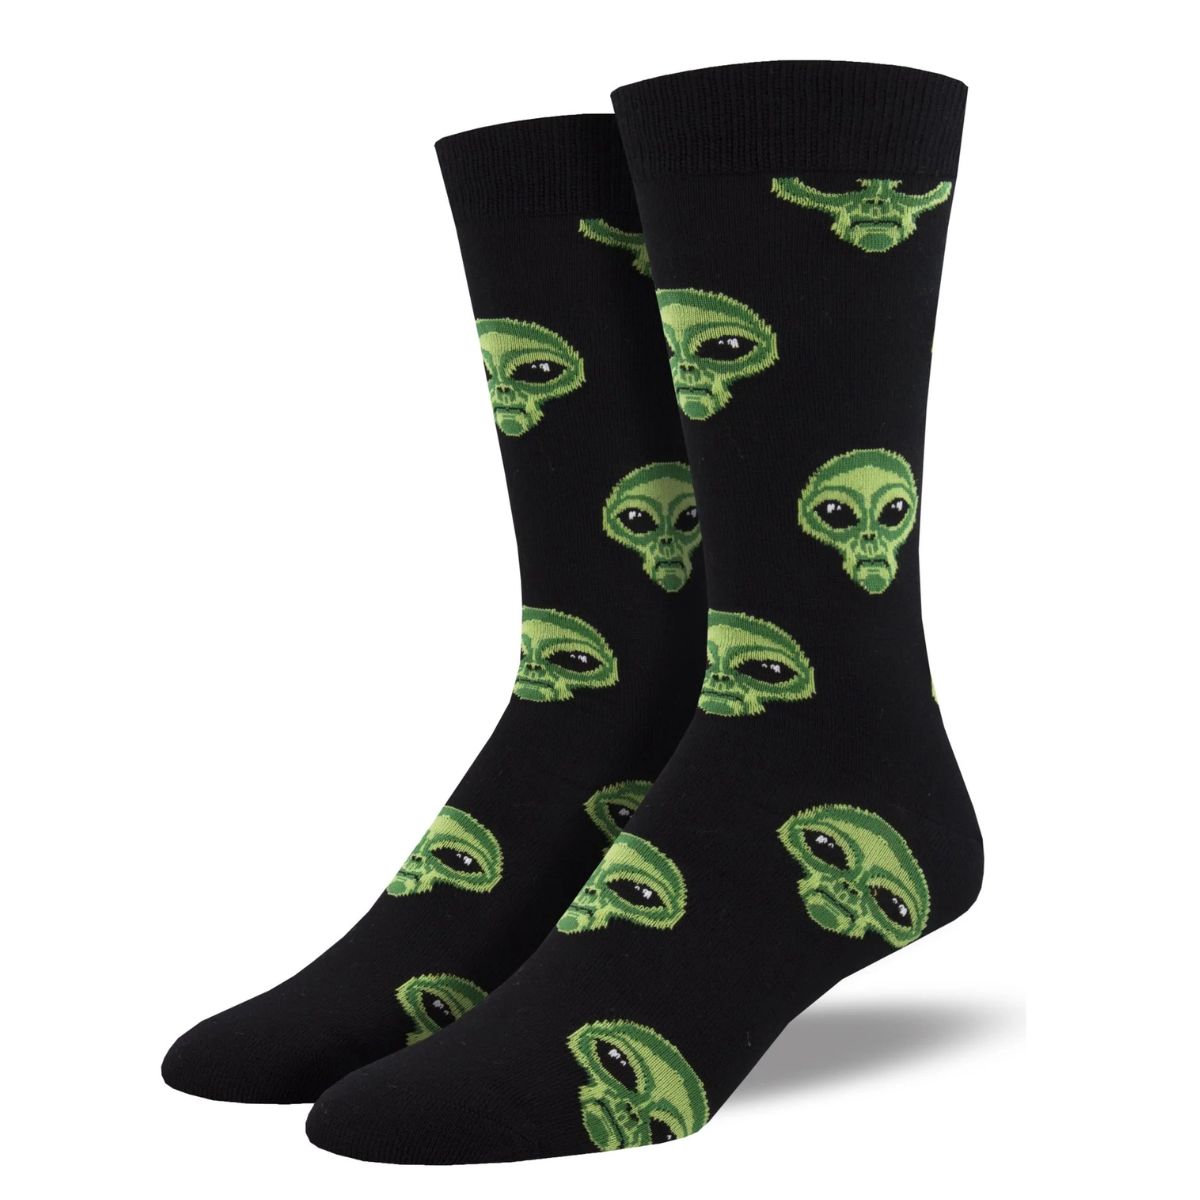 area 51 socks a pair of black crew socks with alien print